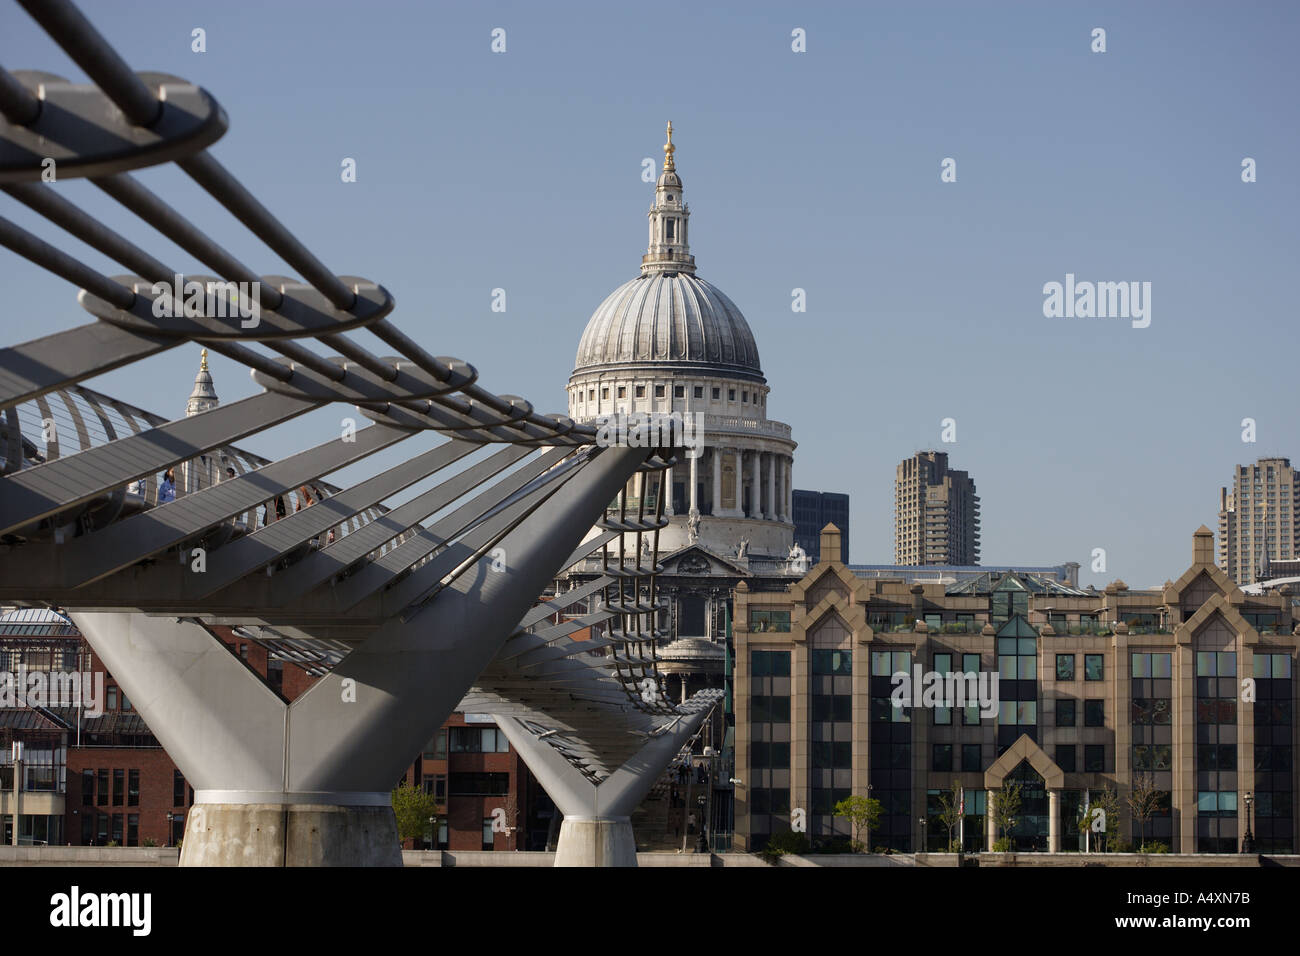 Saint Paul's cathedral, City of London, England, UK, Britain Millennium bridge, Stock Photo